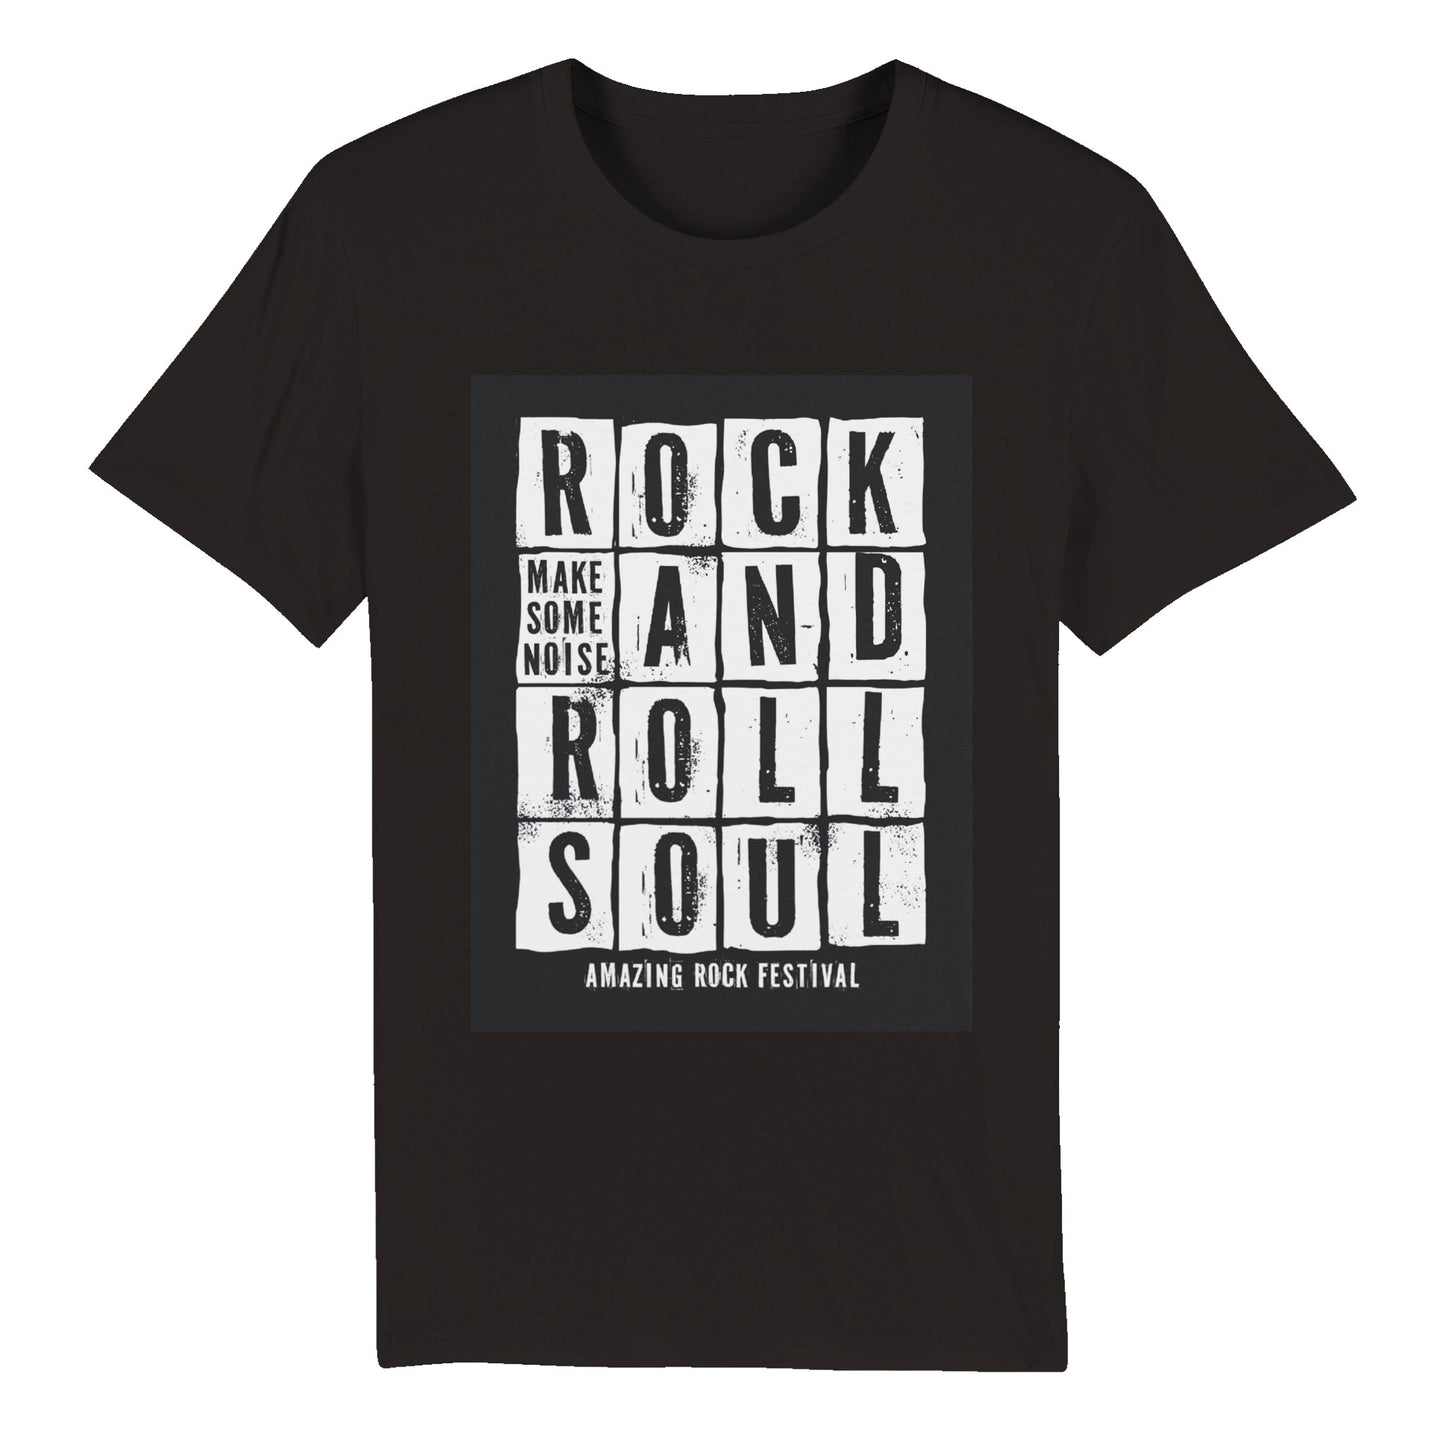 100% Organic Unisex T-shirt/Rock-And-Roll-Soul